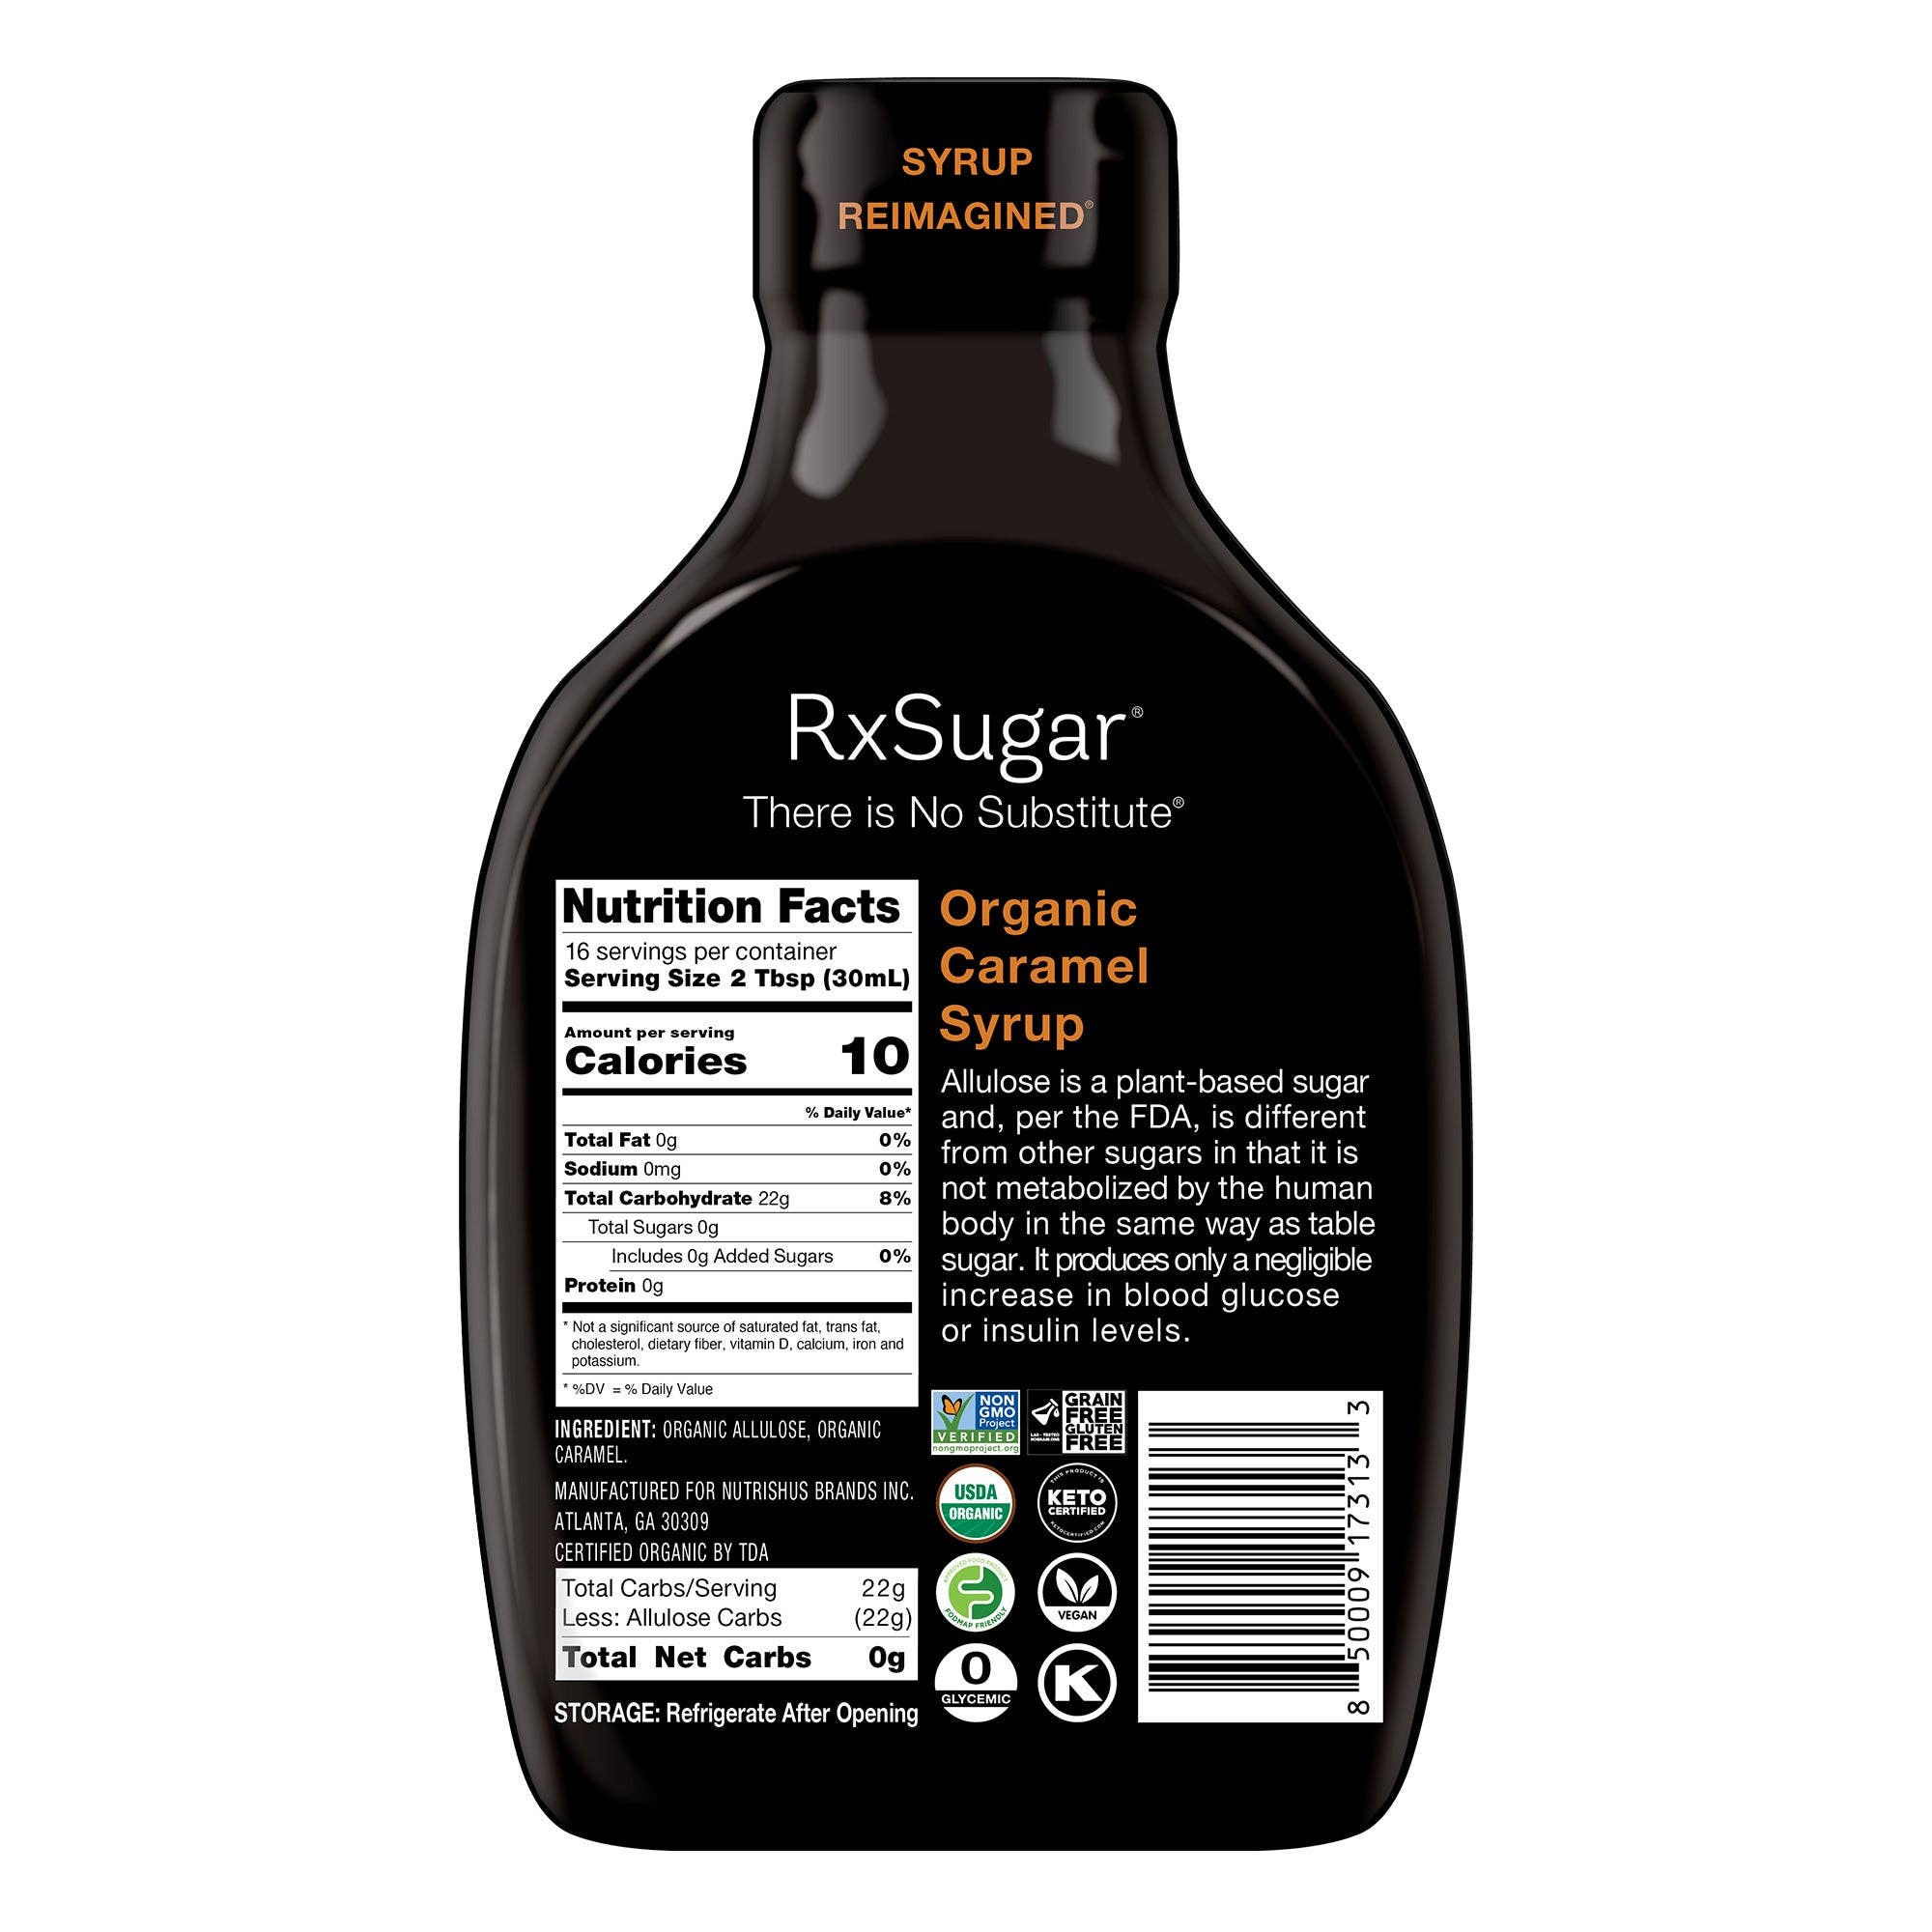 RxSugar® Organic Caramel Syrup